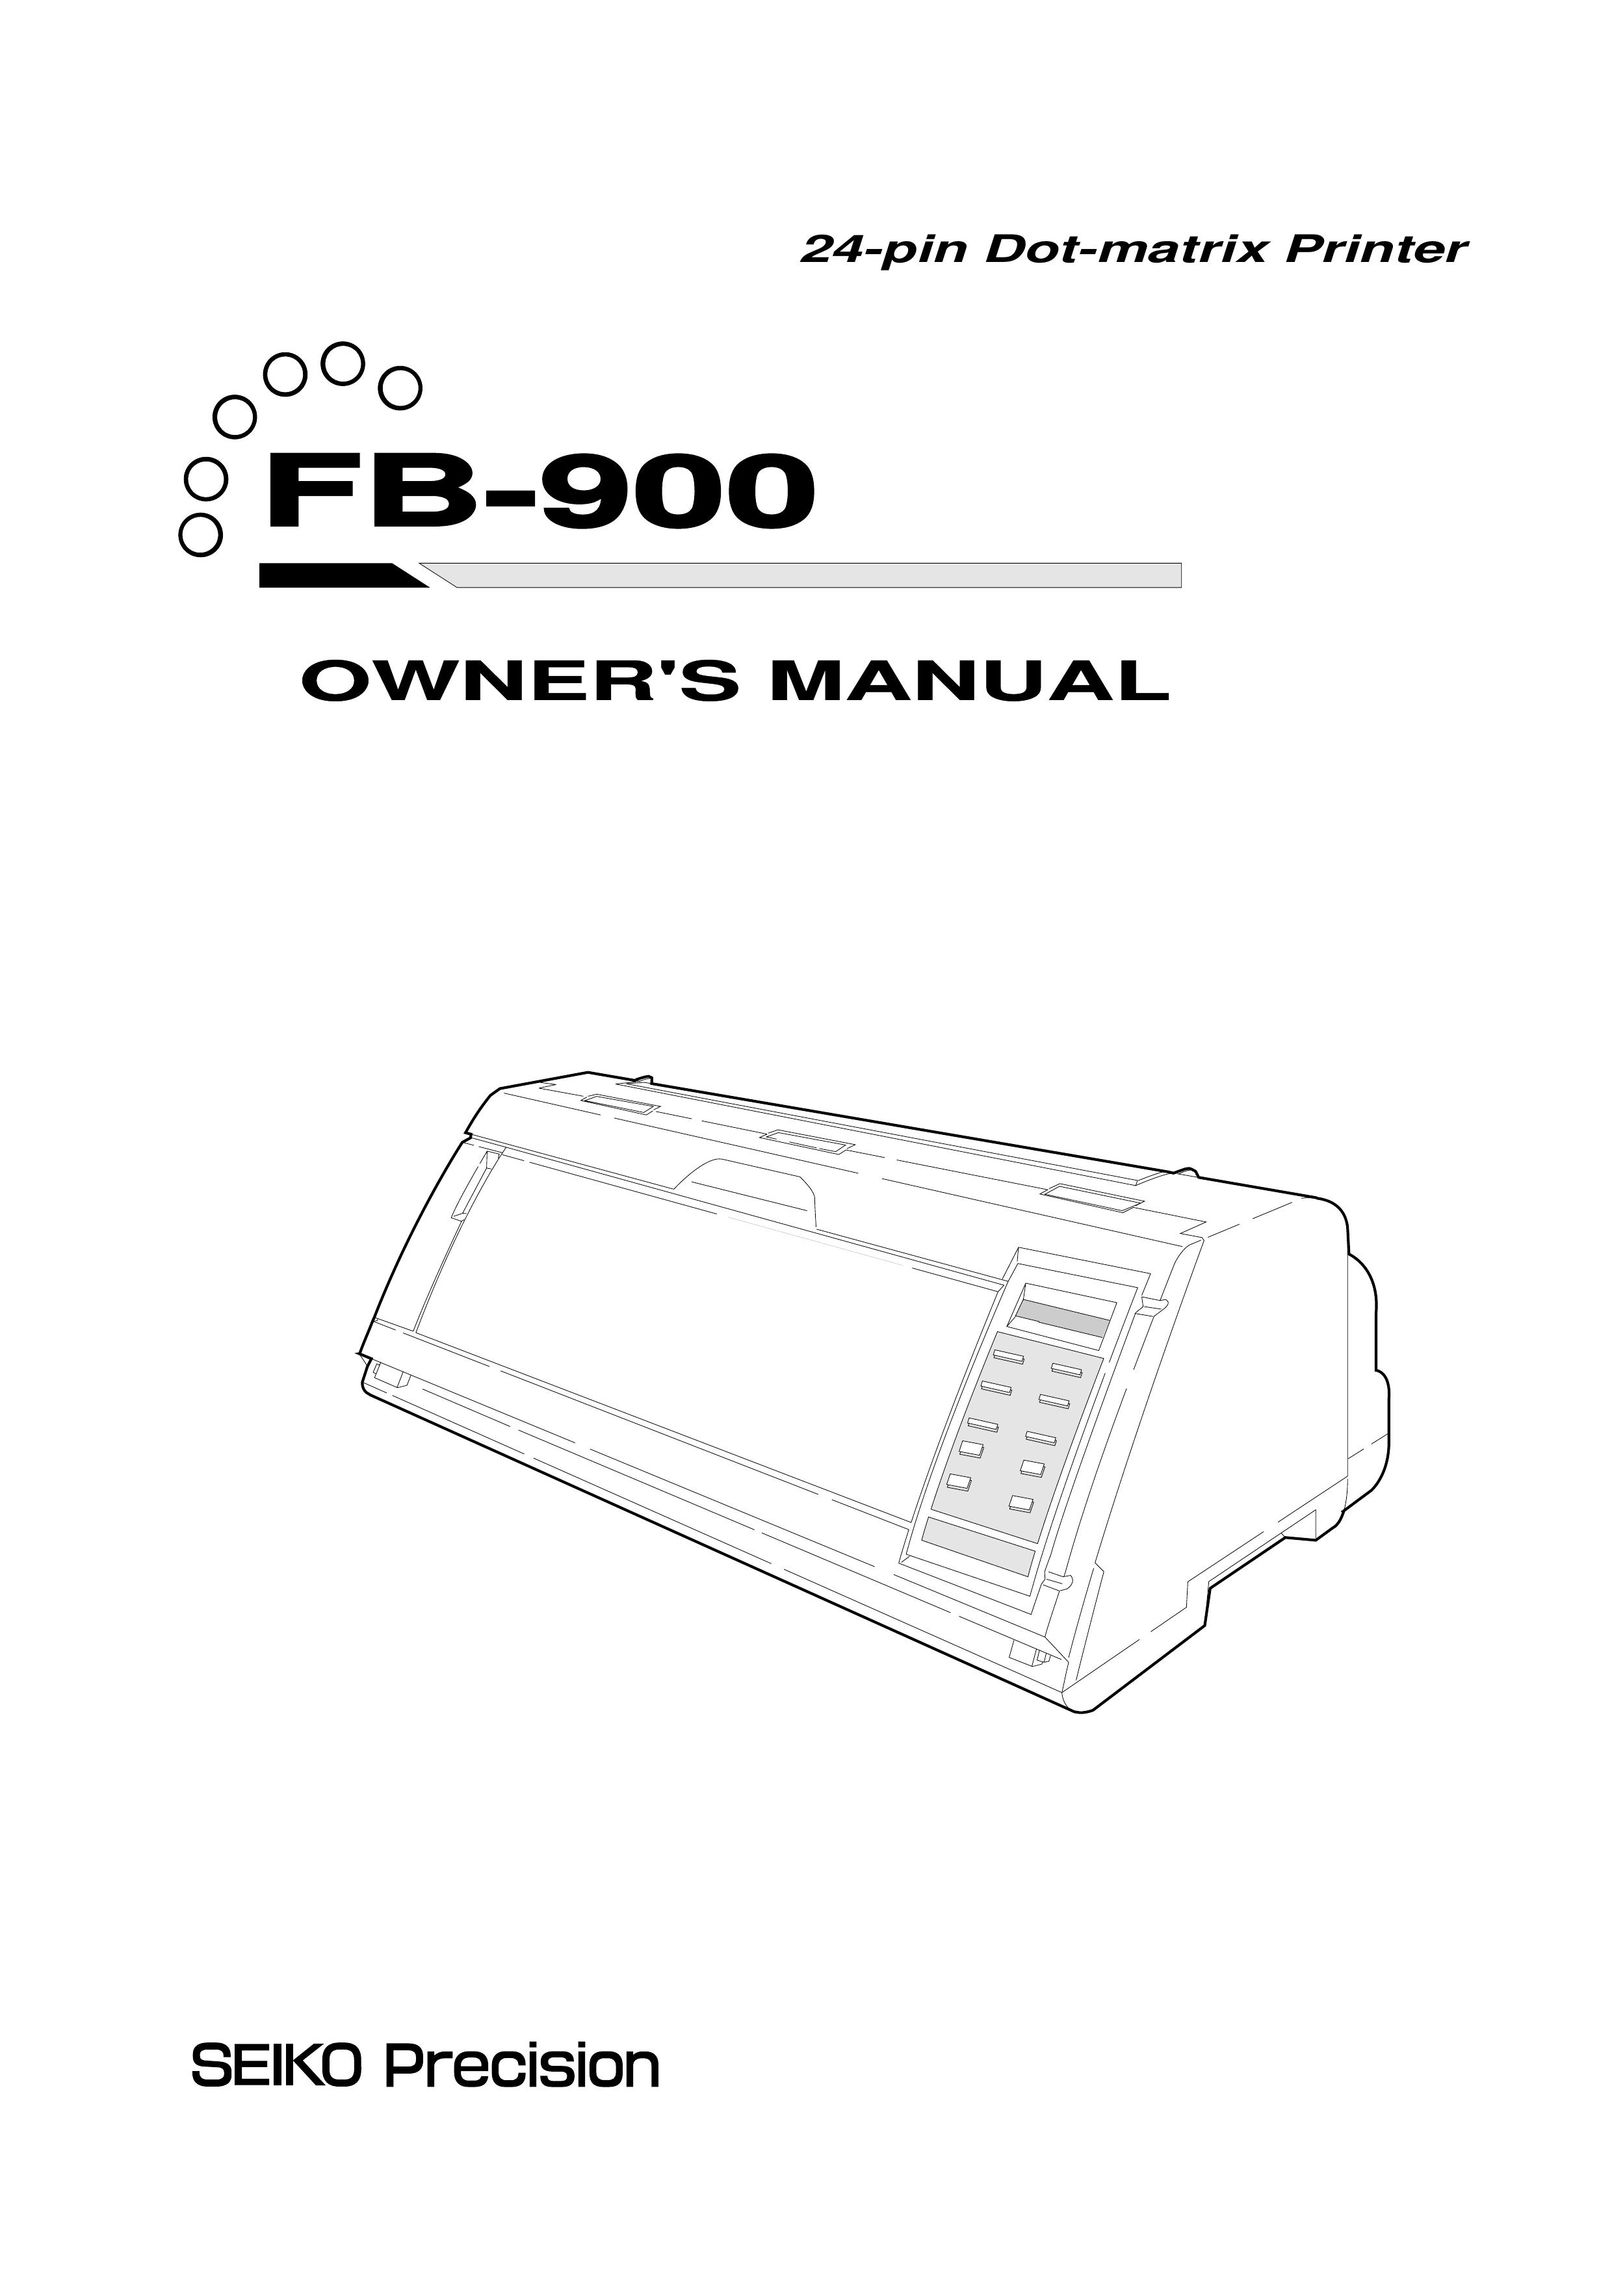 Seiko FB-900 Printer User Manual